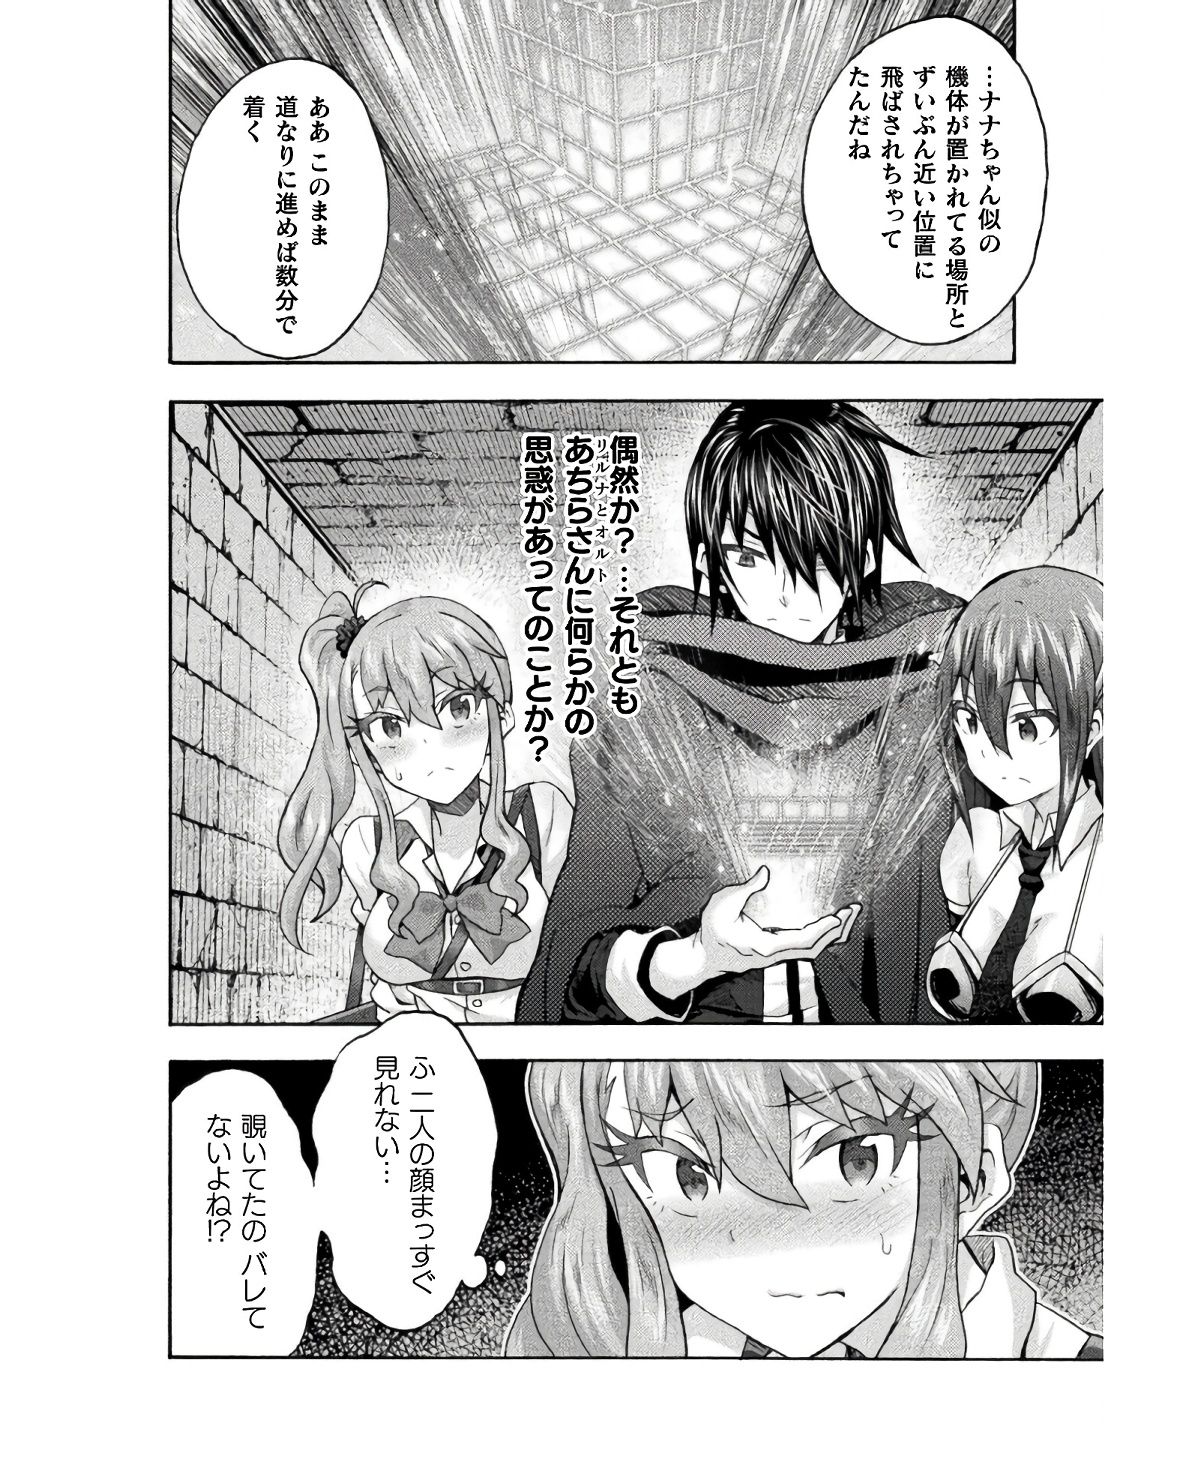 Himekishi ga Classmate! - Chapter 57 - Page 2